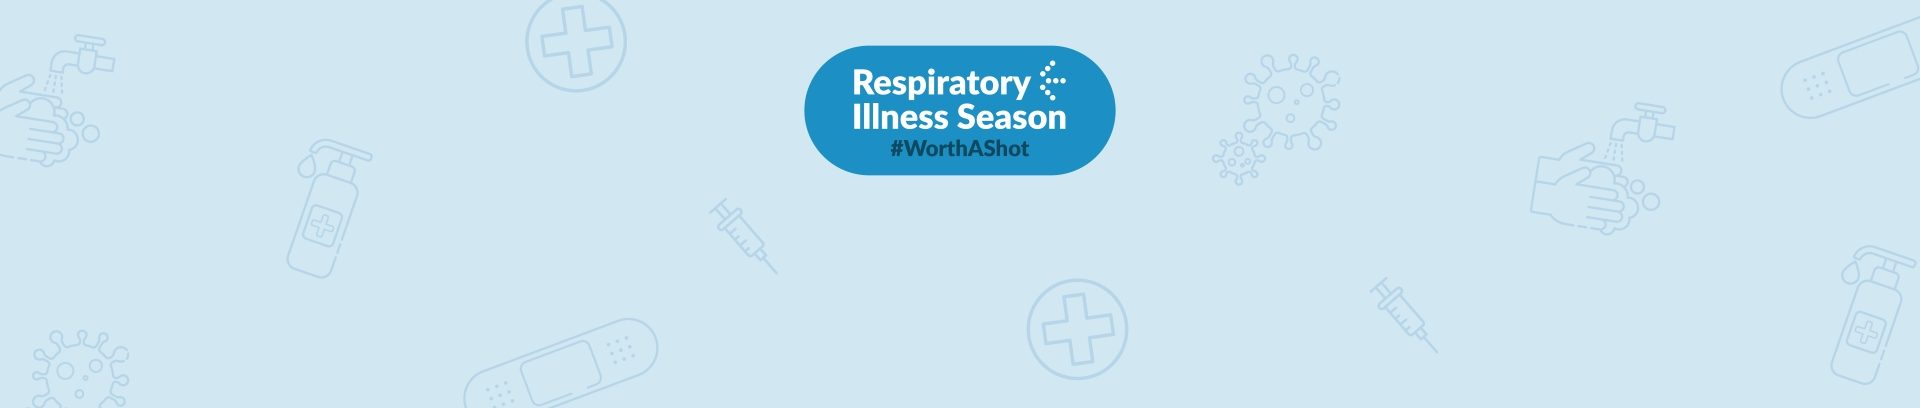 Stay healthy this respiratory illness season 